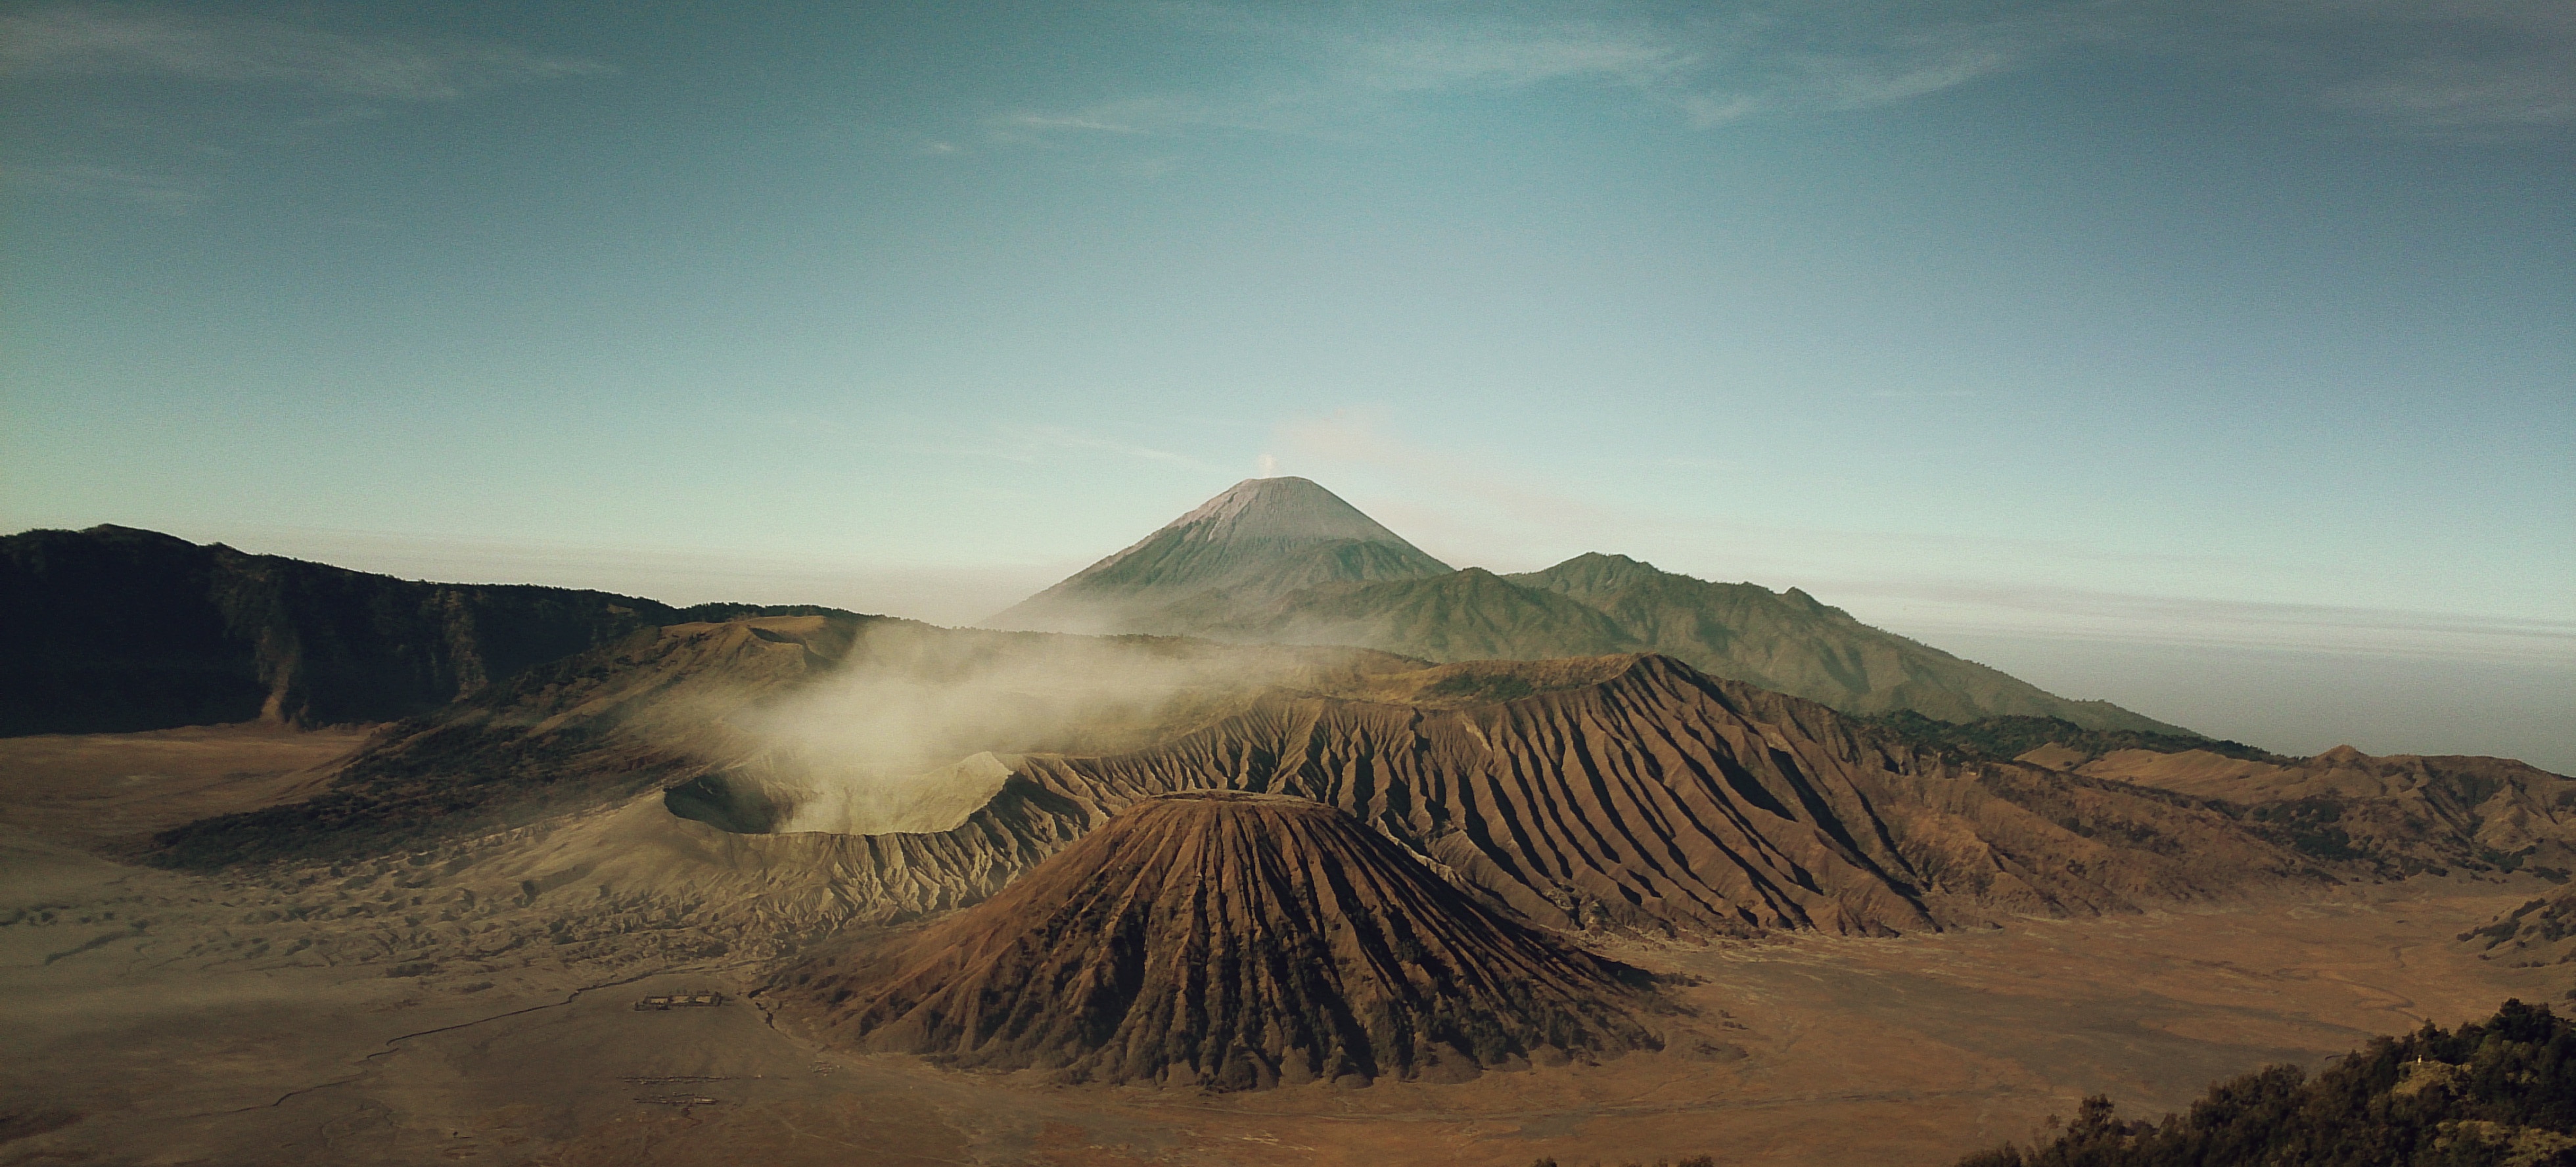 Volcano Indonesia Mountain 3920x1776